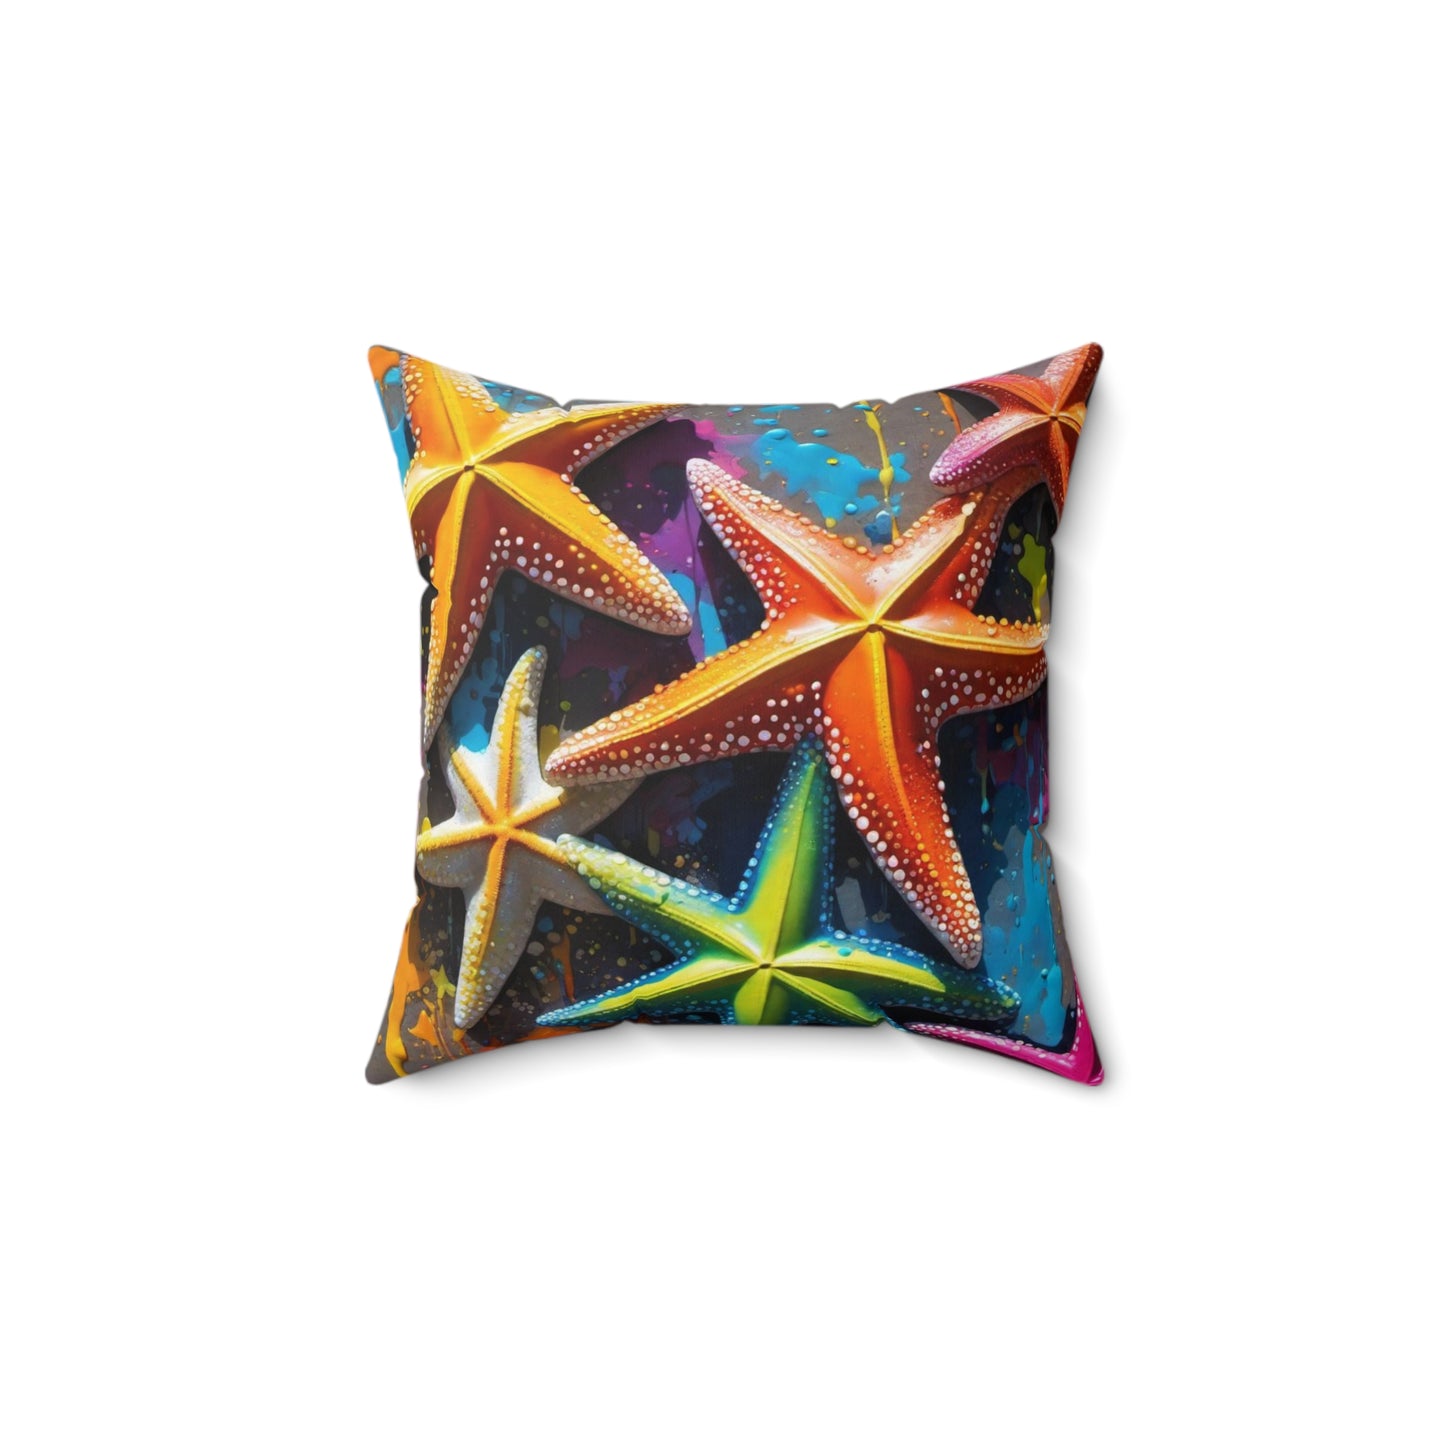 Starfish Square Pillow